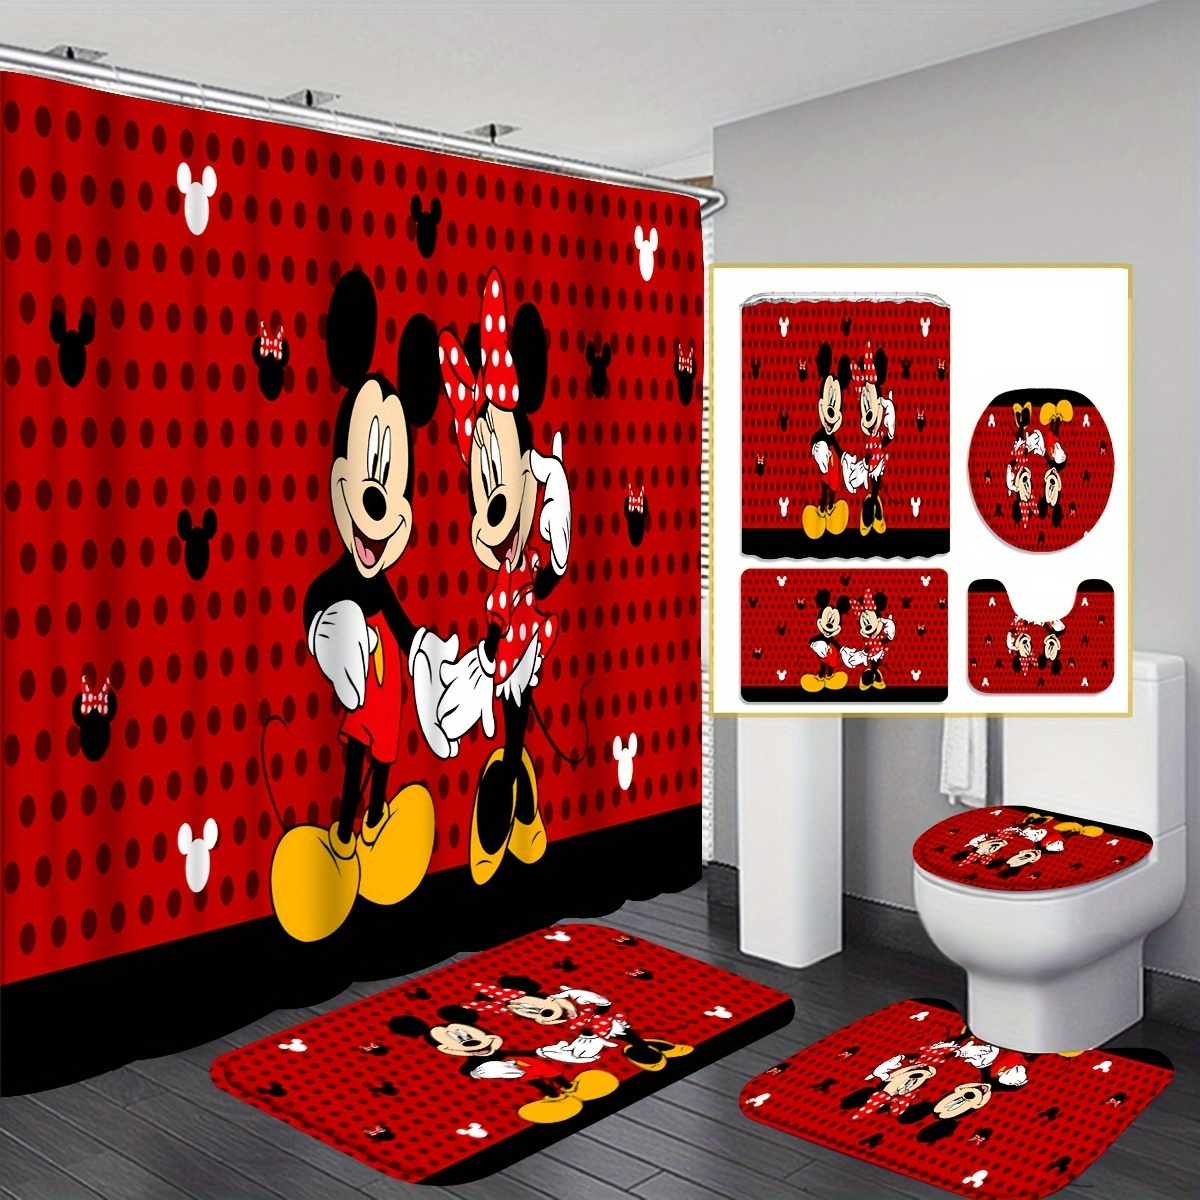 

4pcs Disney Mickey & Mouse Bathroom Set, Polka Dot Design, Waterproof Shower Curtain With 12 Hooks, Non-slip Bath Mat, Toilet Cover, And U-shaped Rug, Cartoon Themed Bathroom Decor